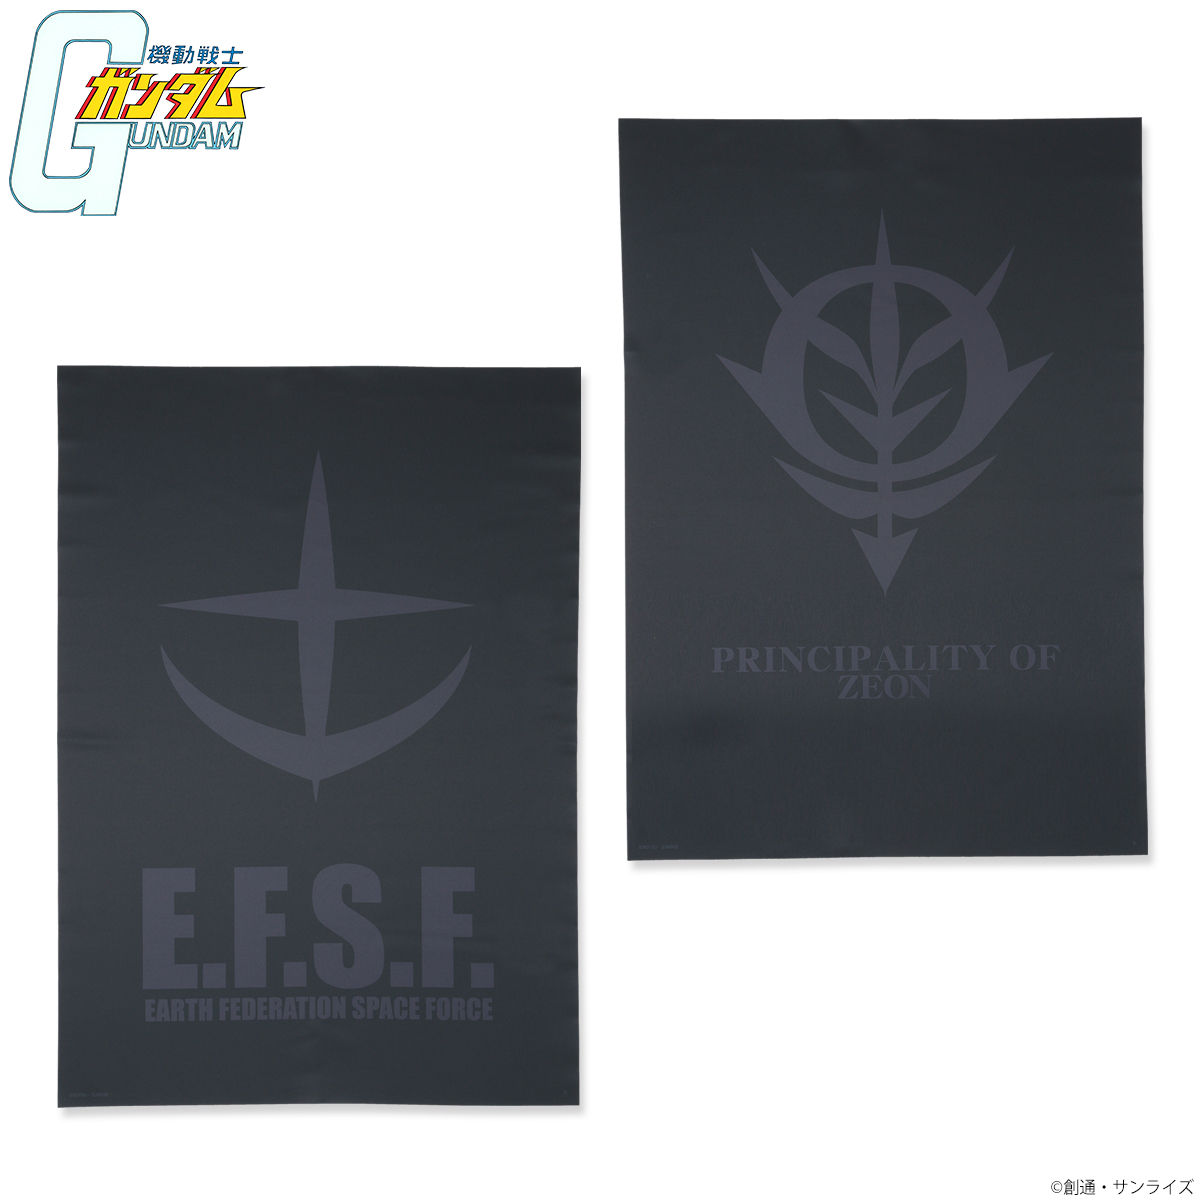 Mobile Suit Gundam Black Emblem Multi-Use Cover